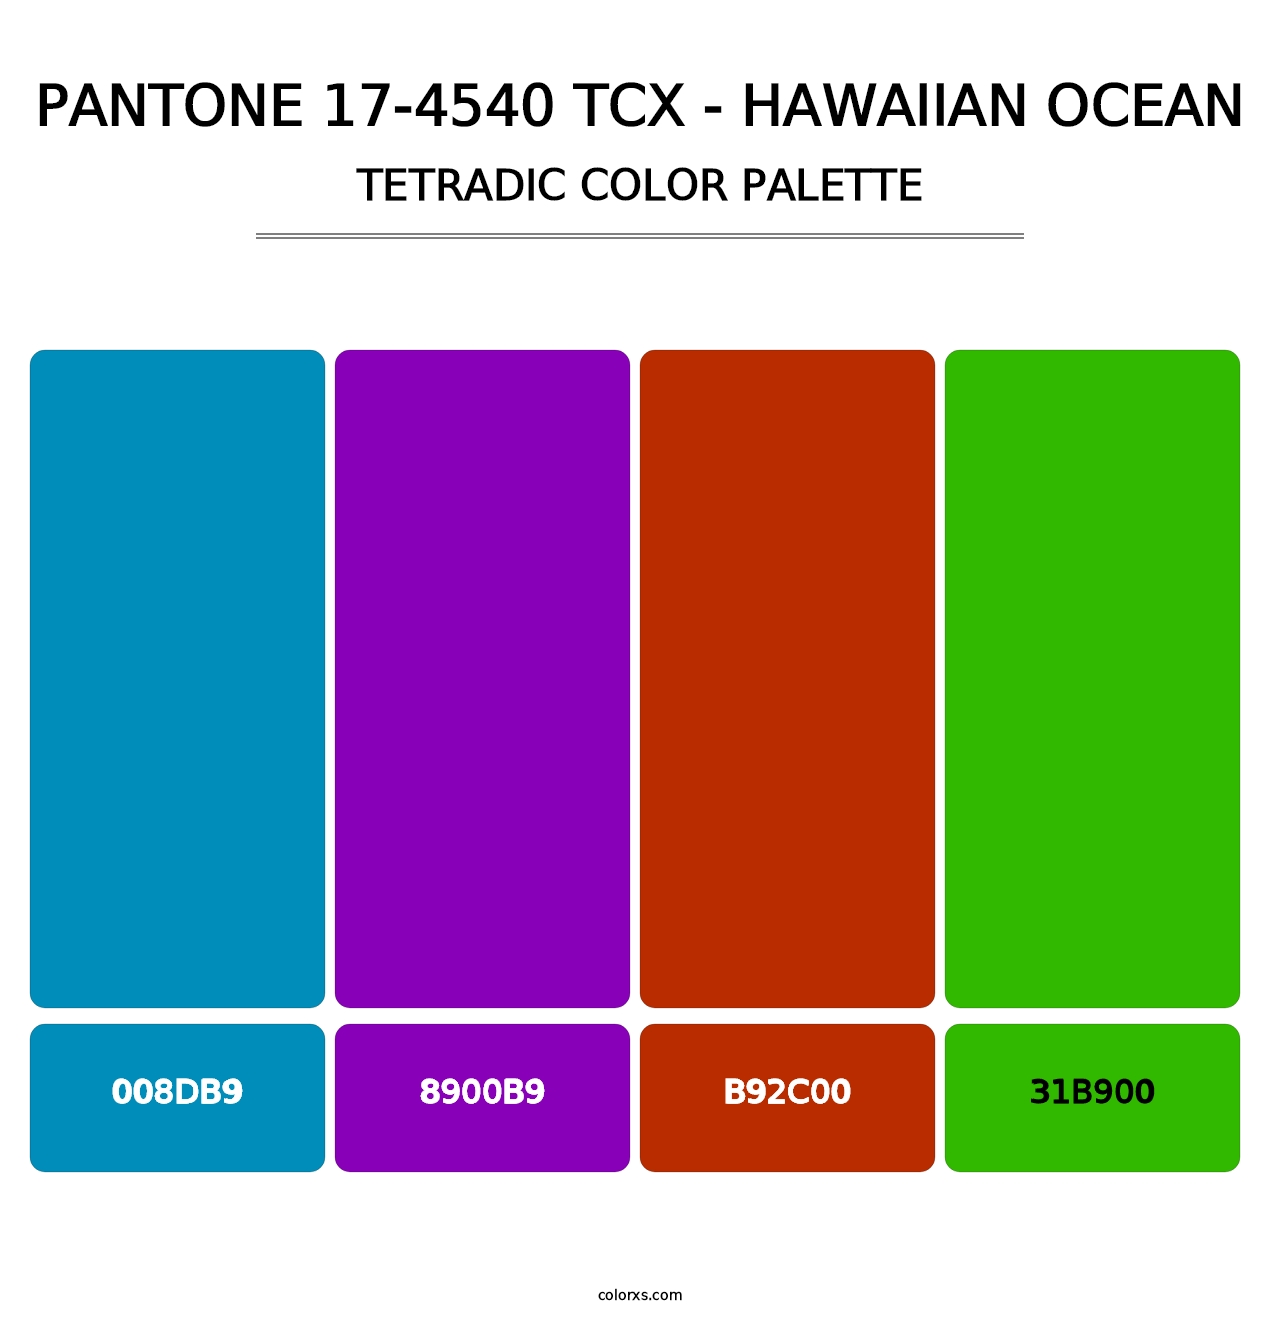 PANTONE 17-4540 TCX - Hawaiian Ocean - Tetradic Color Palette